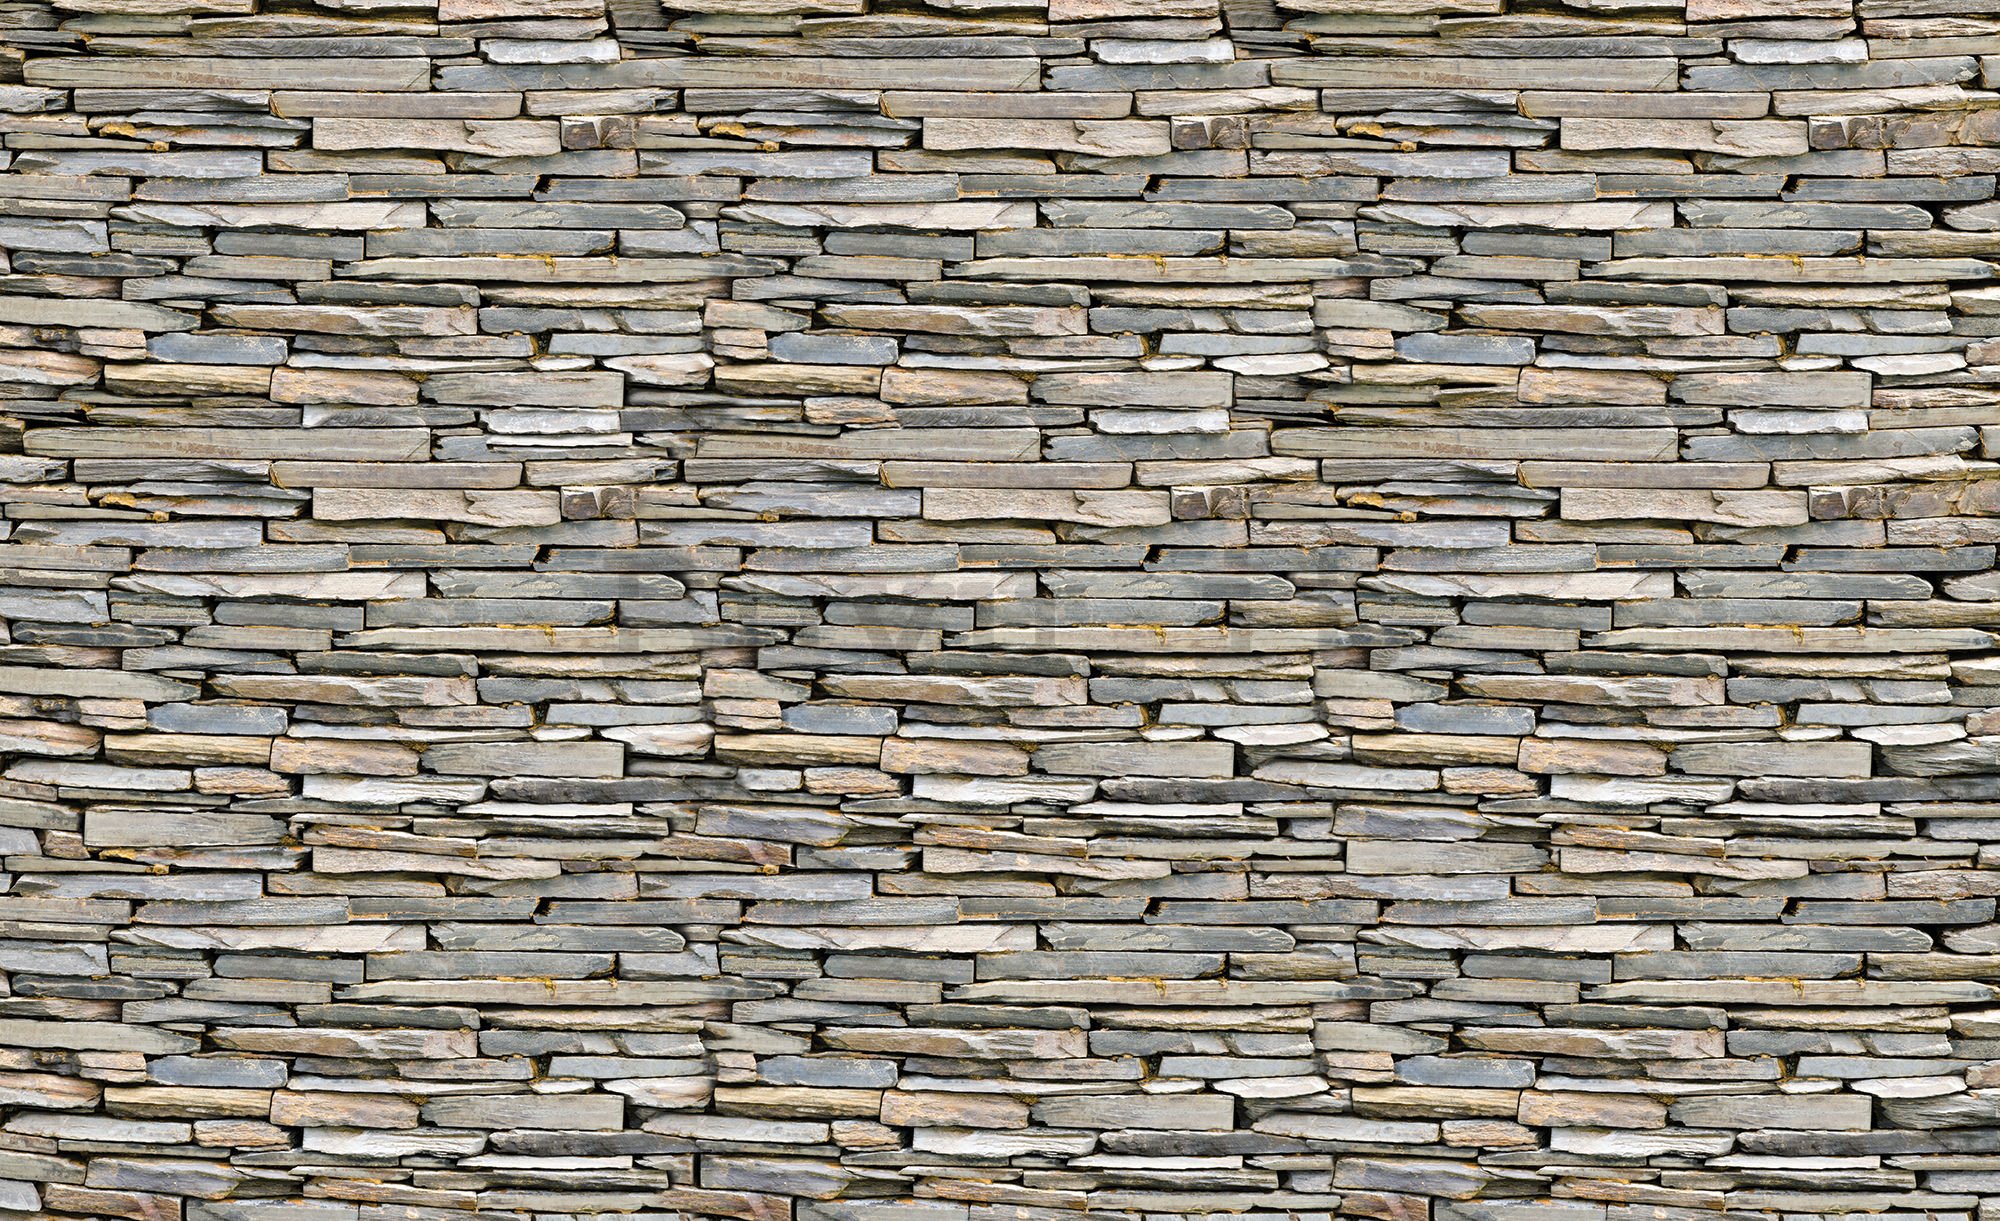 Fotomurale: Muro di pietra (1) - 184x254 cm